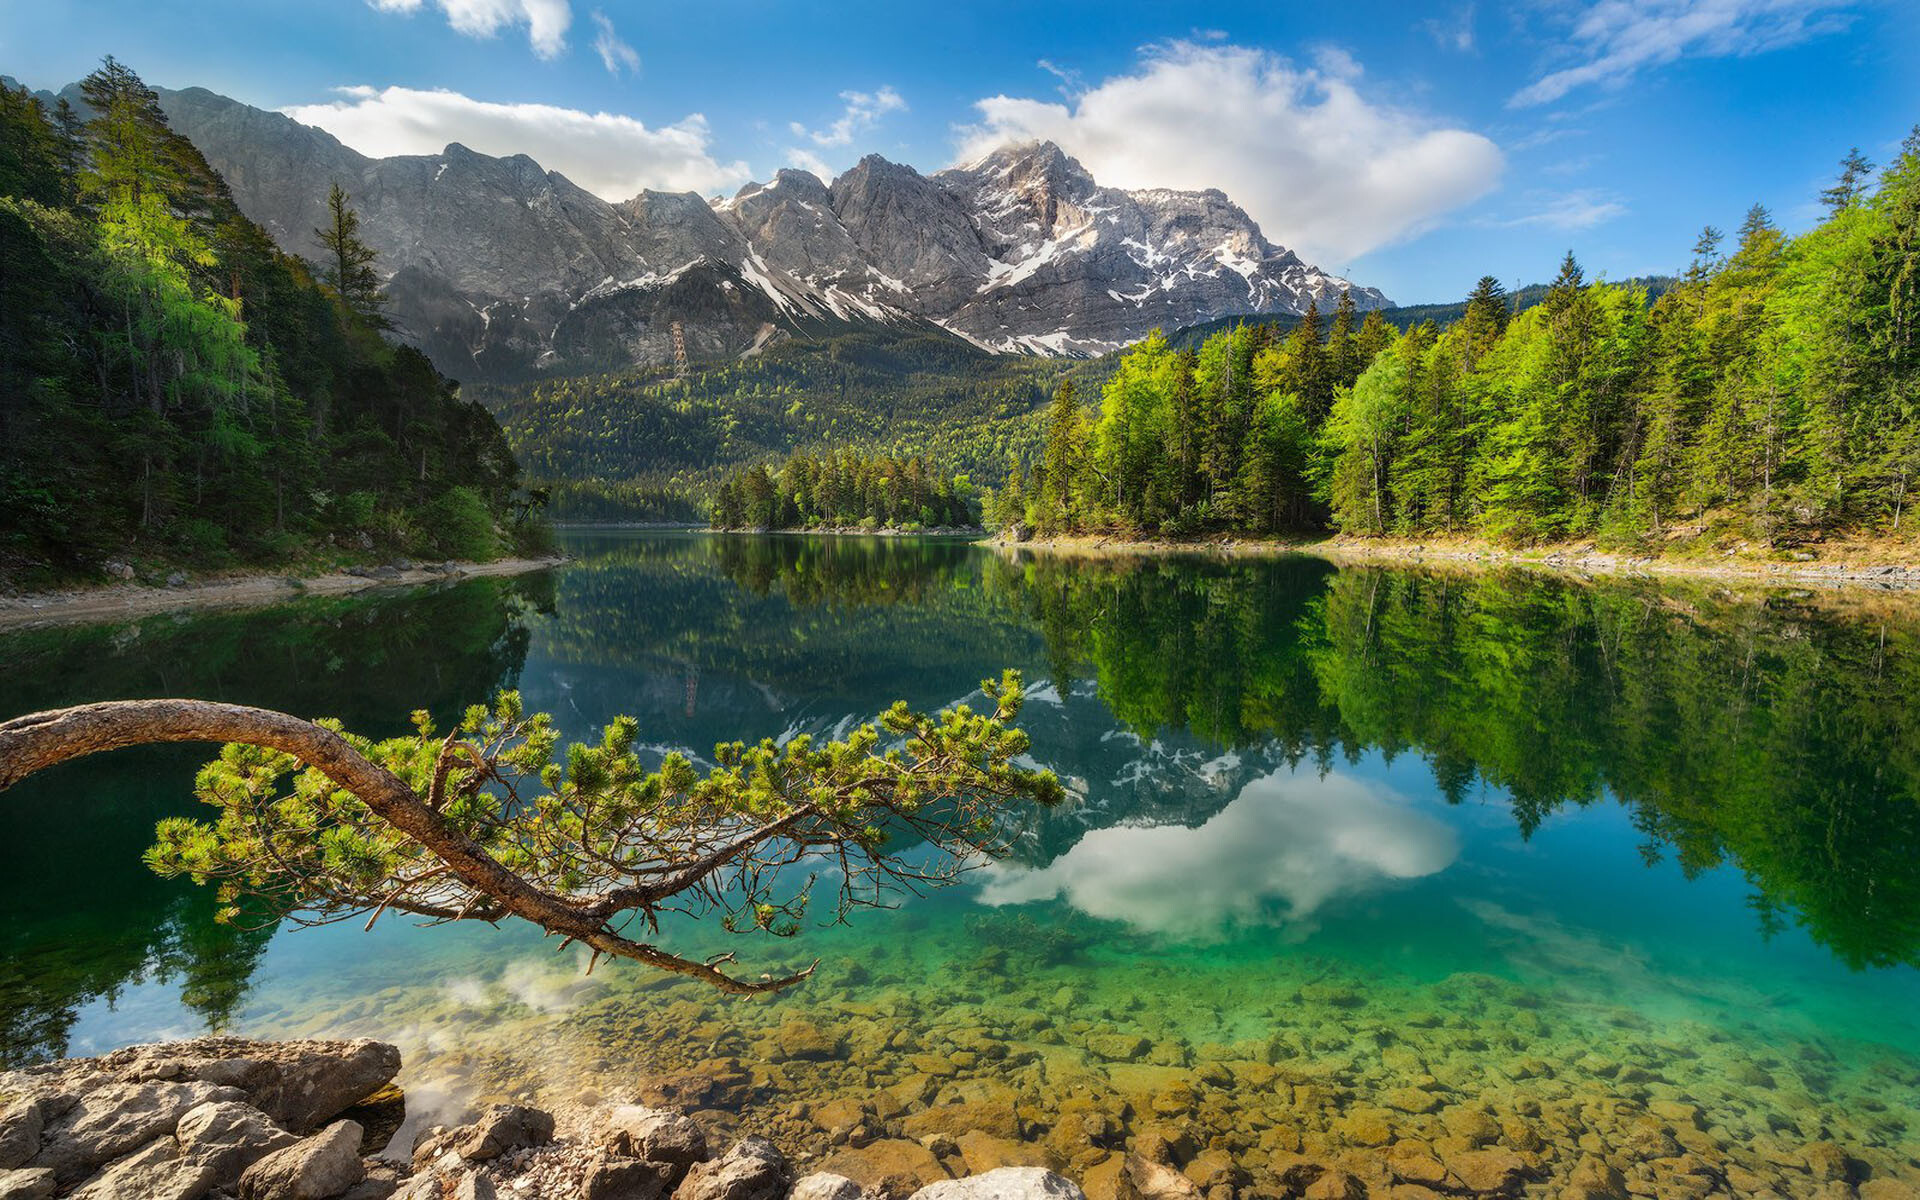 Lake: Eibsee Reservoir, The Bavarian Alps, Green Clear Water, Mountains. 1920x1200 HD Wallpaper.